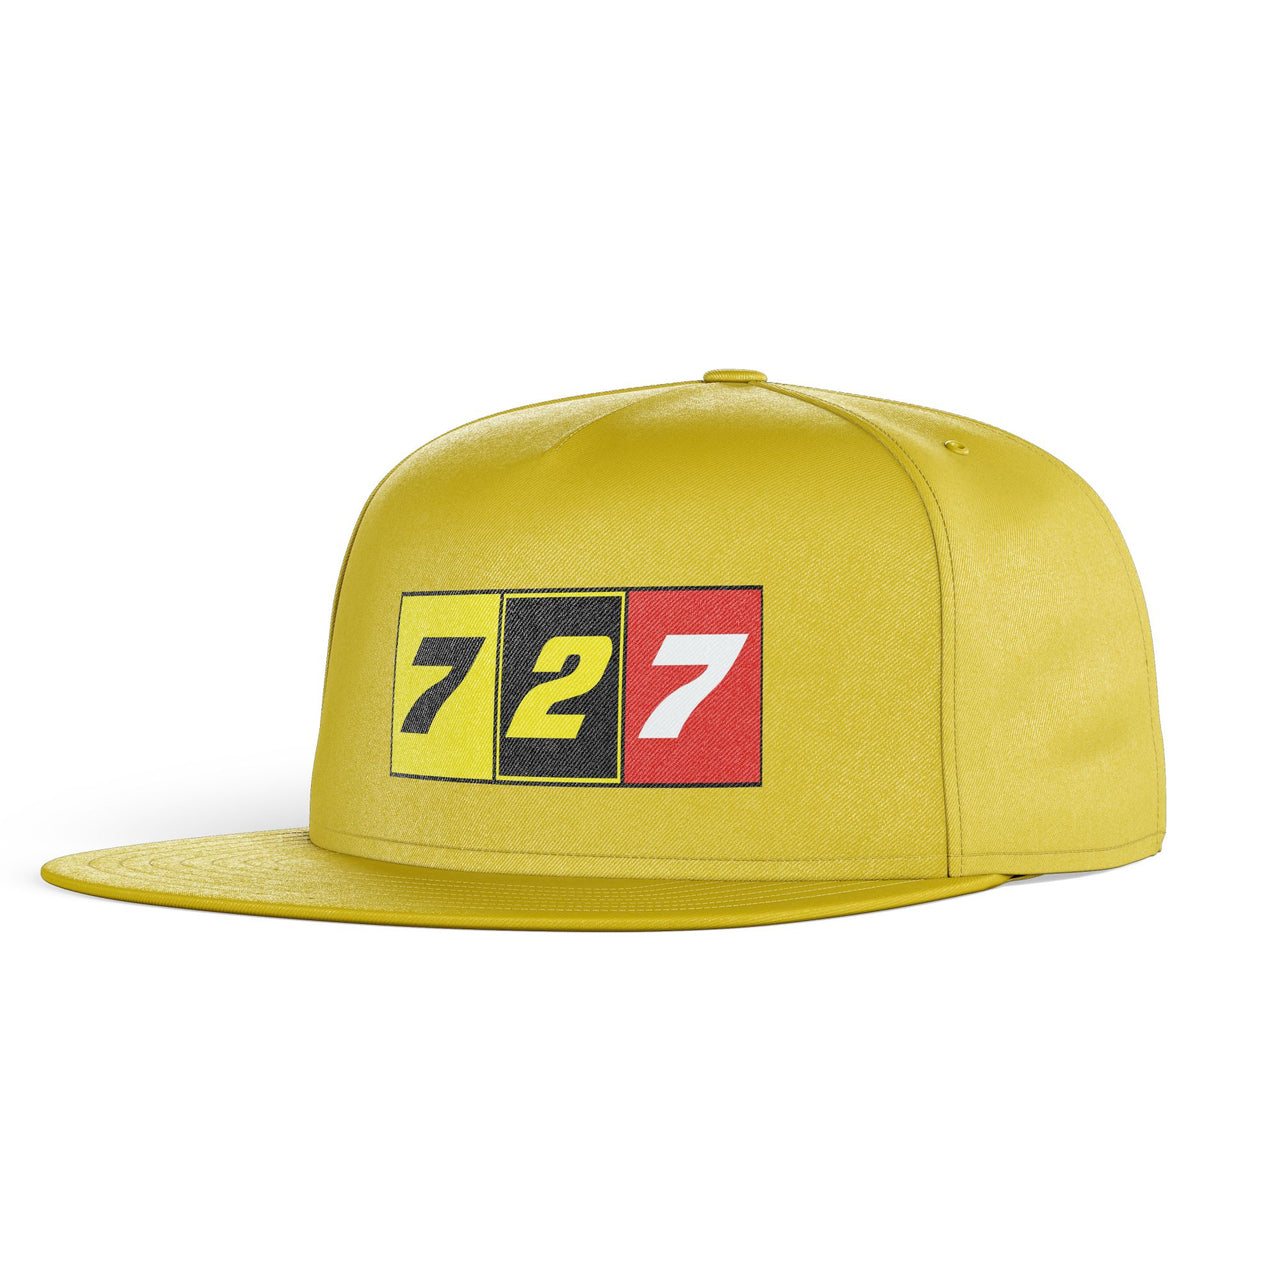 Flat Colourful 727 Designed Snapback Caps & Hats